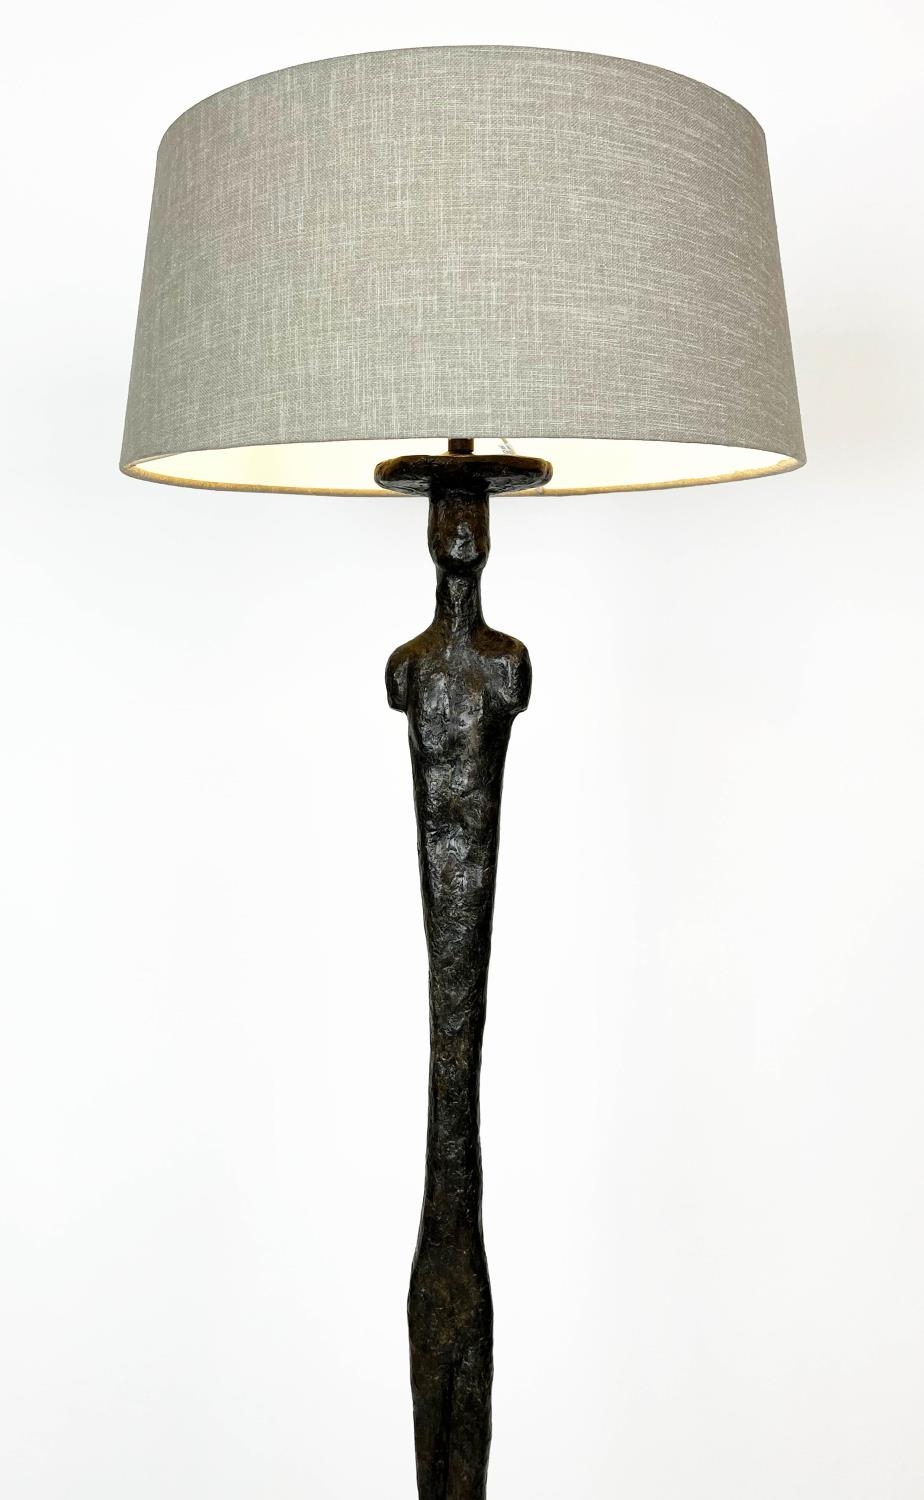 PORTA ROMANA FLOOR LAMP, 169cm H, with shade. - Image 4 of 5